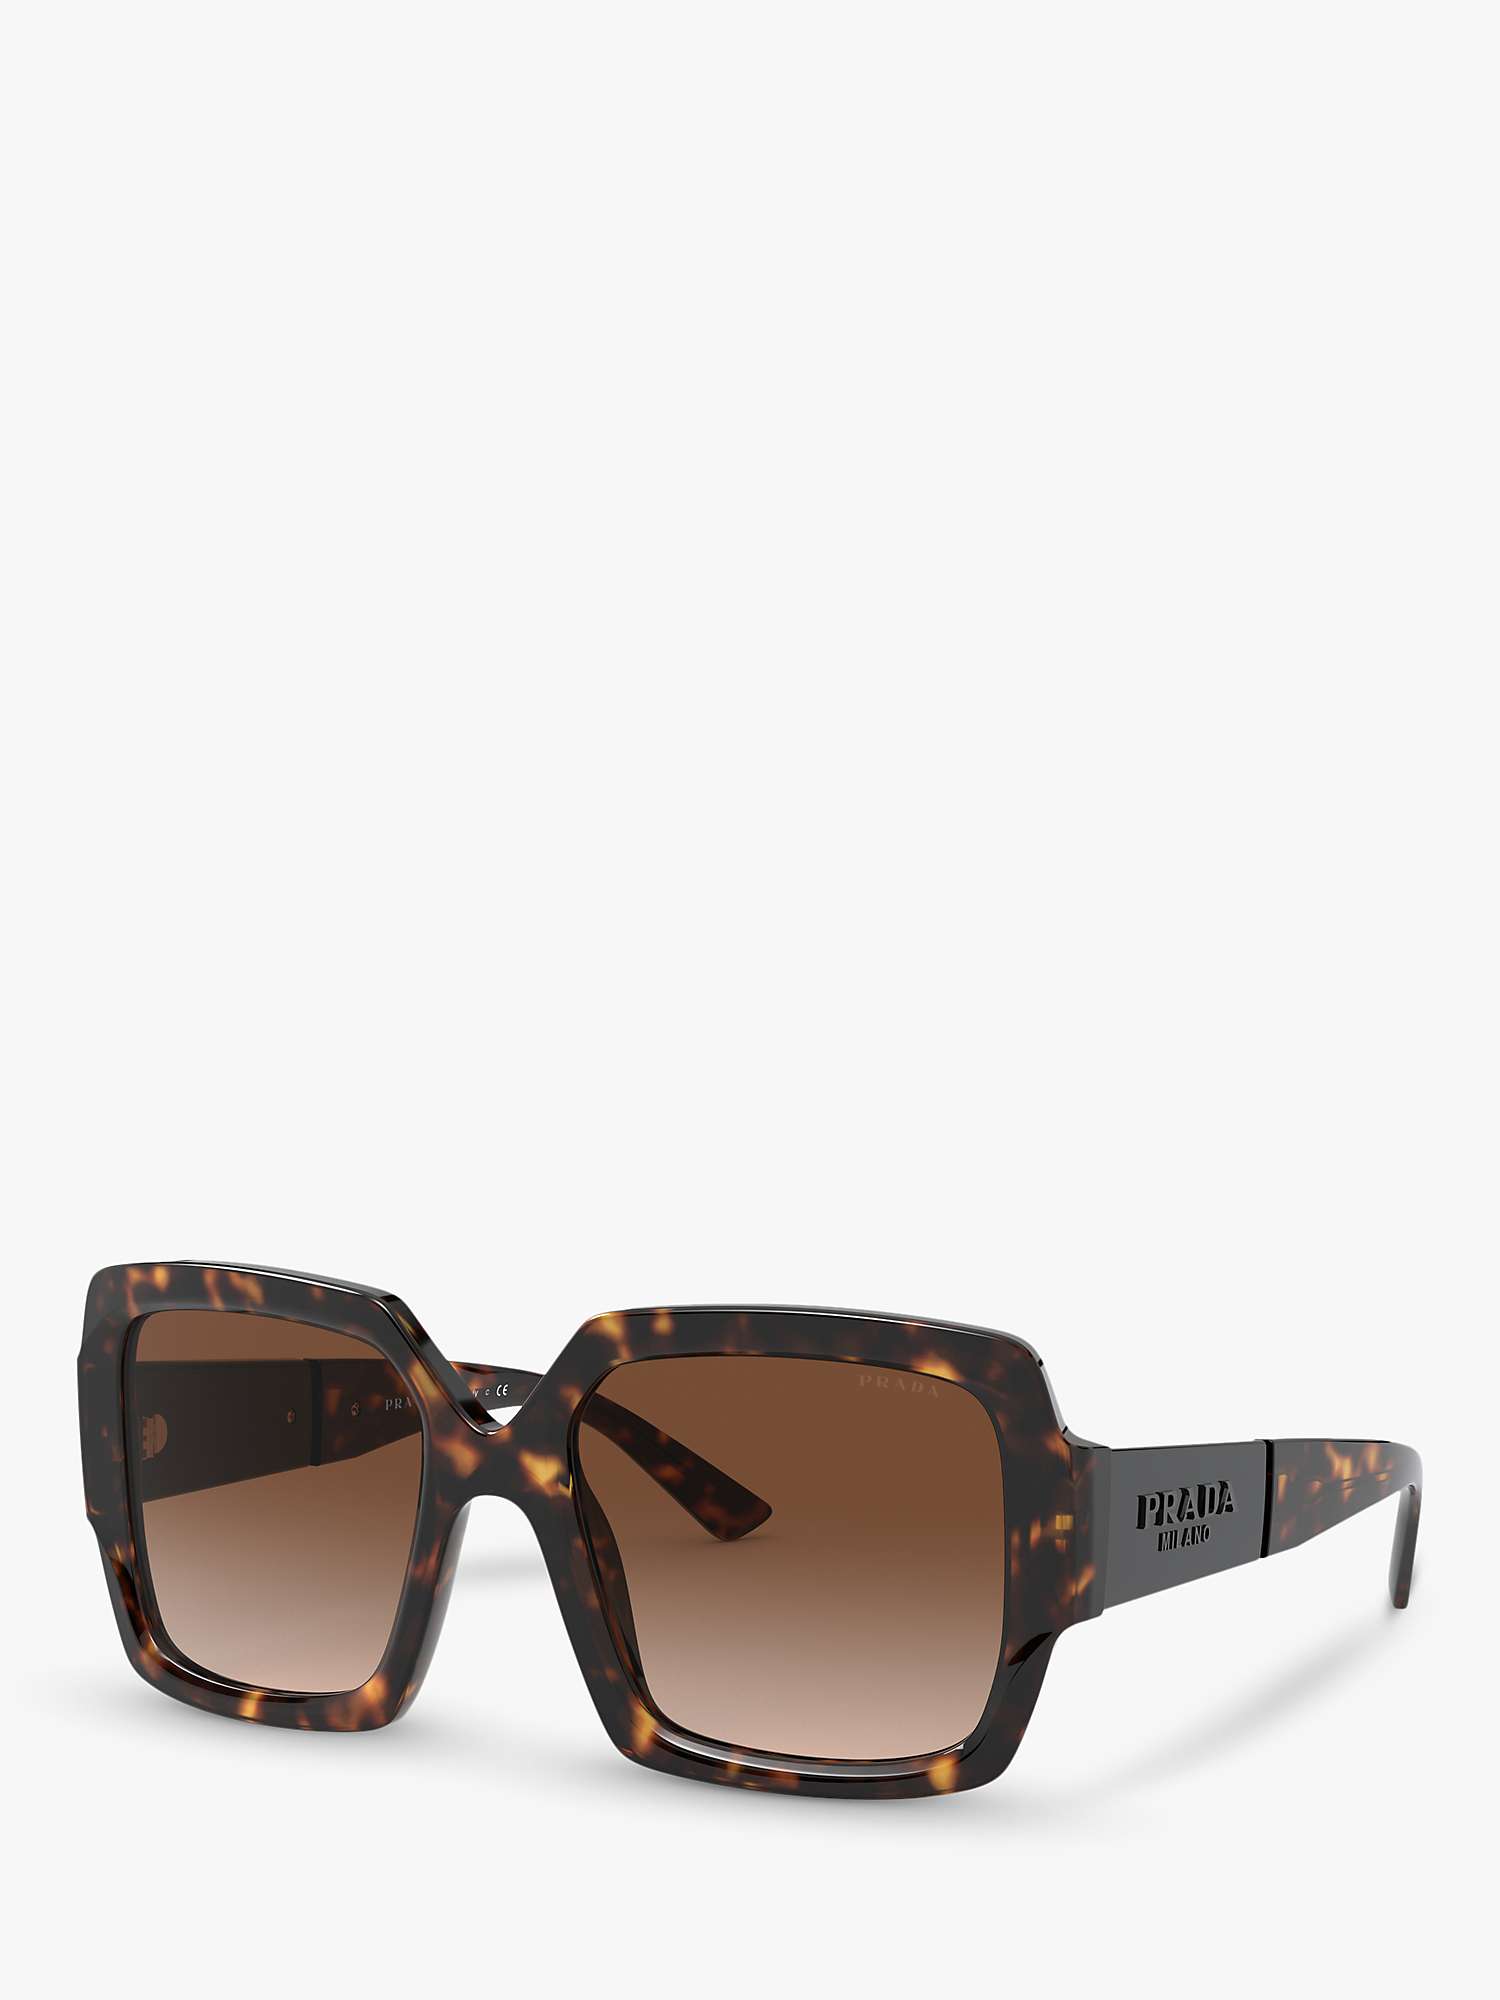 Buy Prada PR 21XS Women's Square Sunglasses, Tortoiseshell/Brown Gradient Online at johnlewis.com